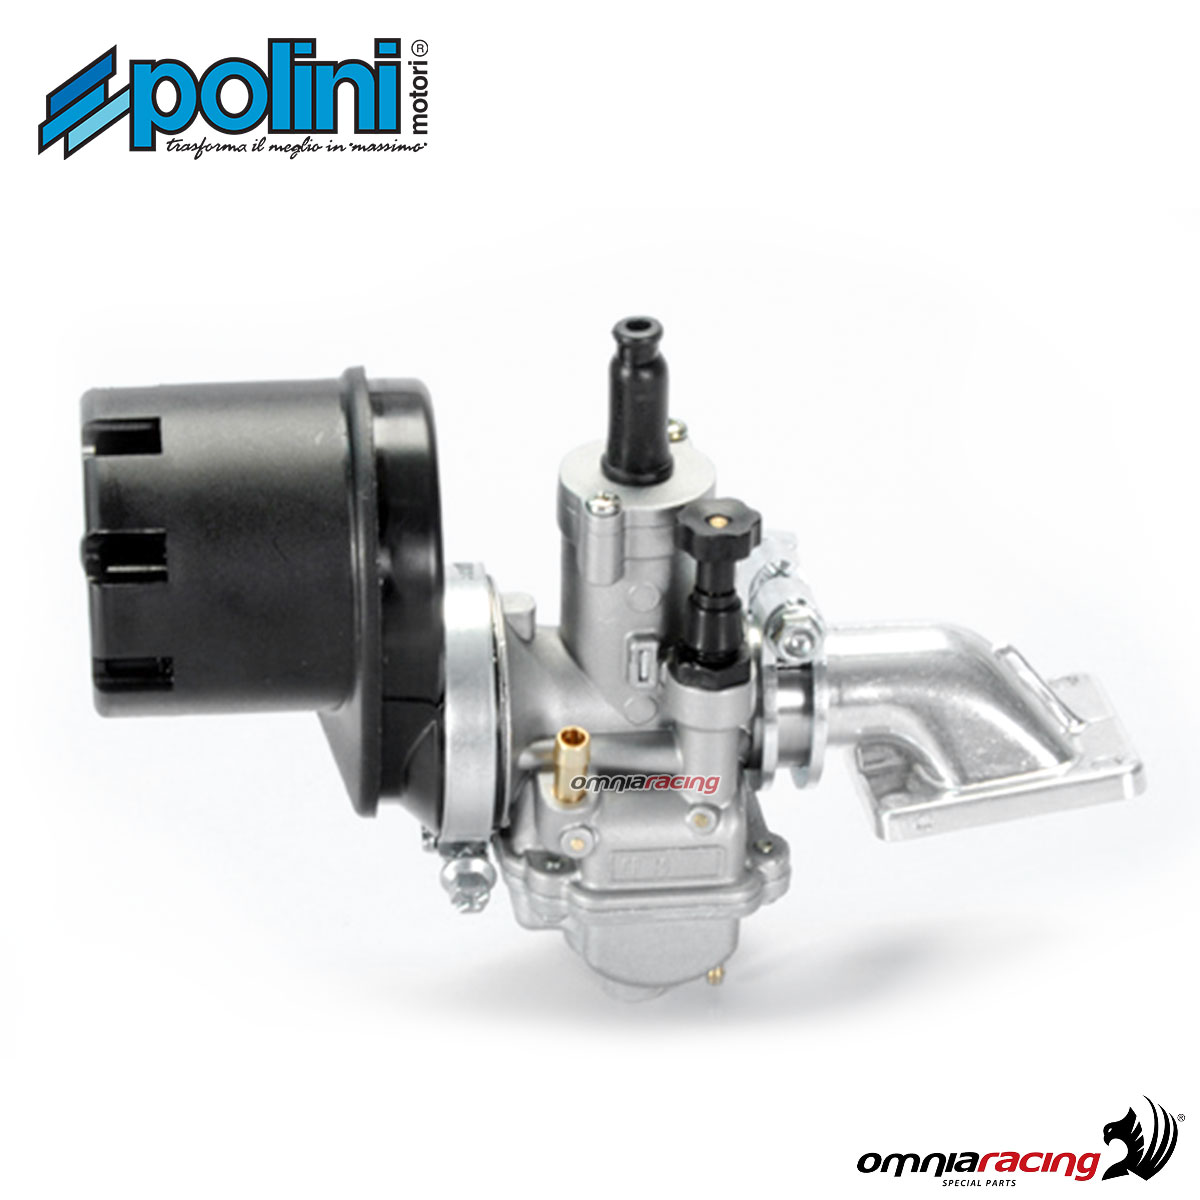 Carburatore Polini CP 19 diametro 19 per Peugeot 103 2T AIR raffreddato ad aria